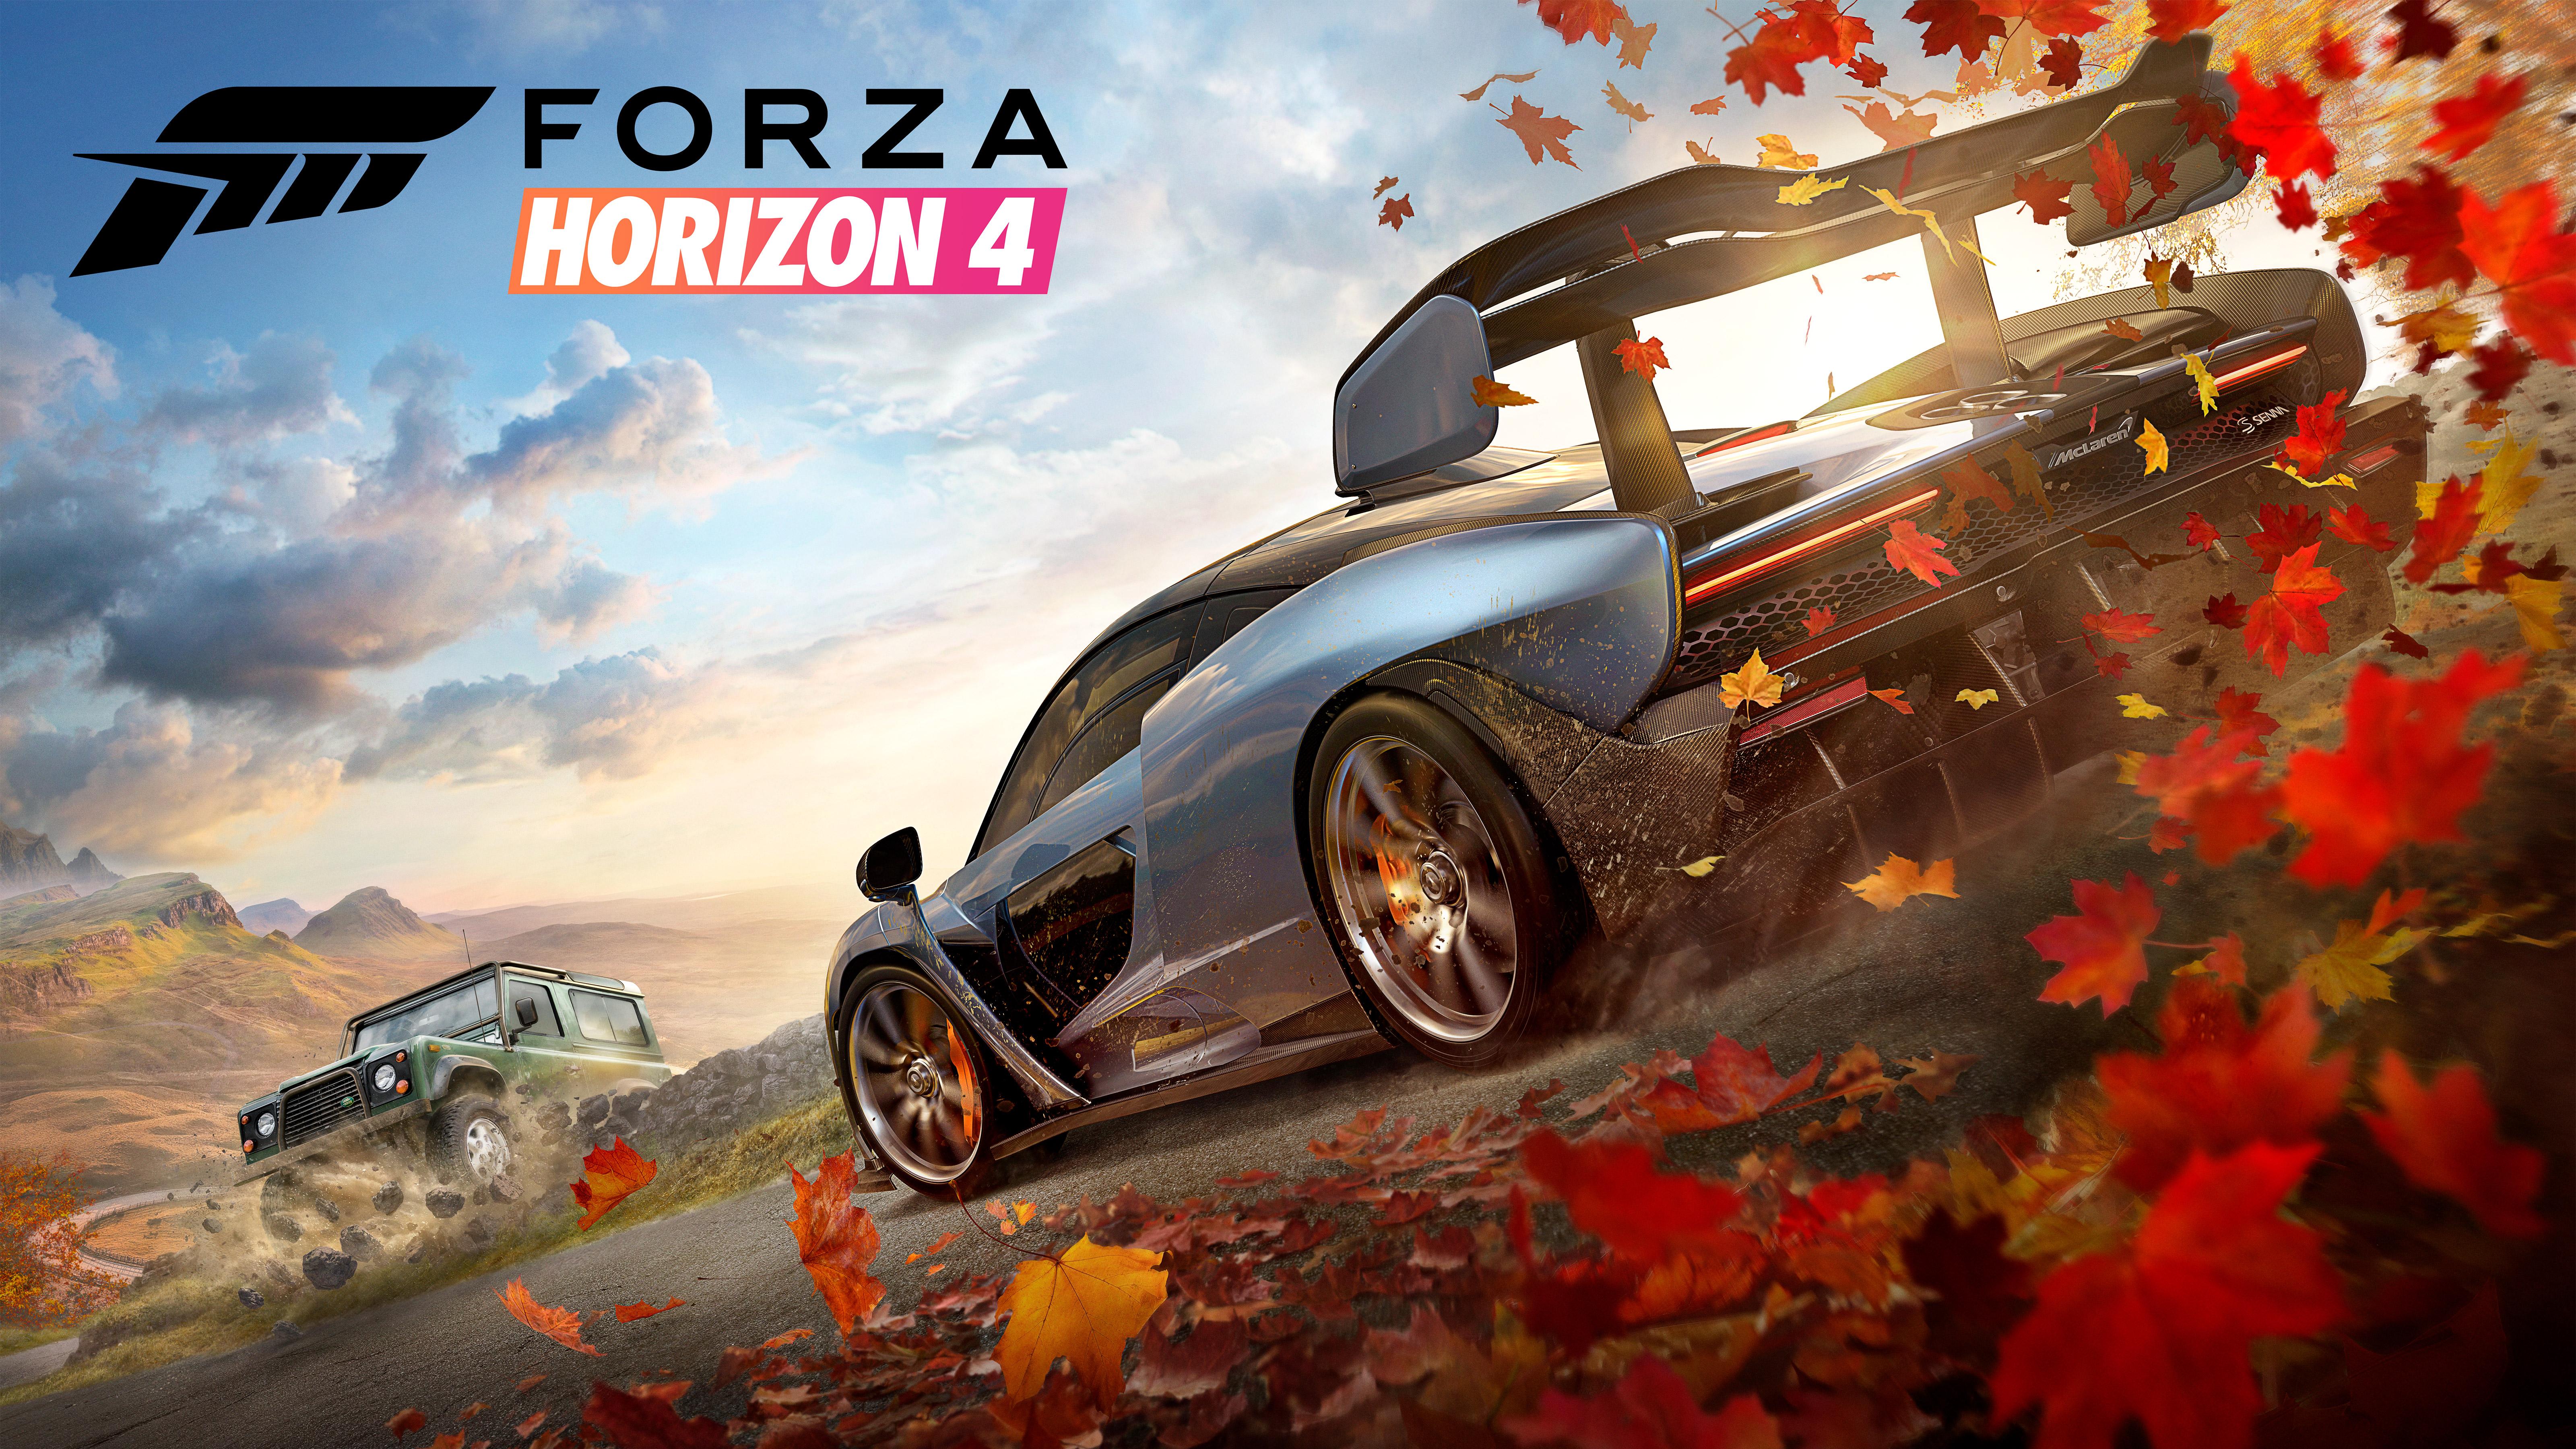 Video Game Forza Horizon 4k Ultra HD Wallpaper